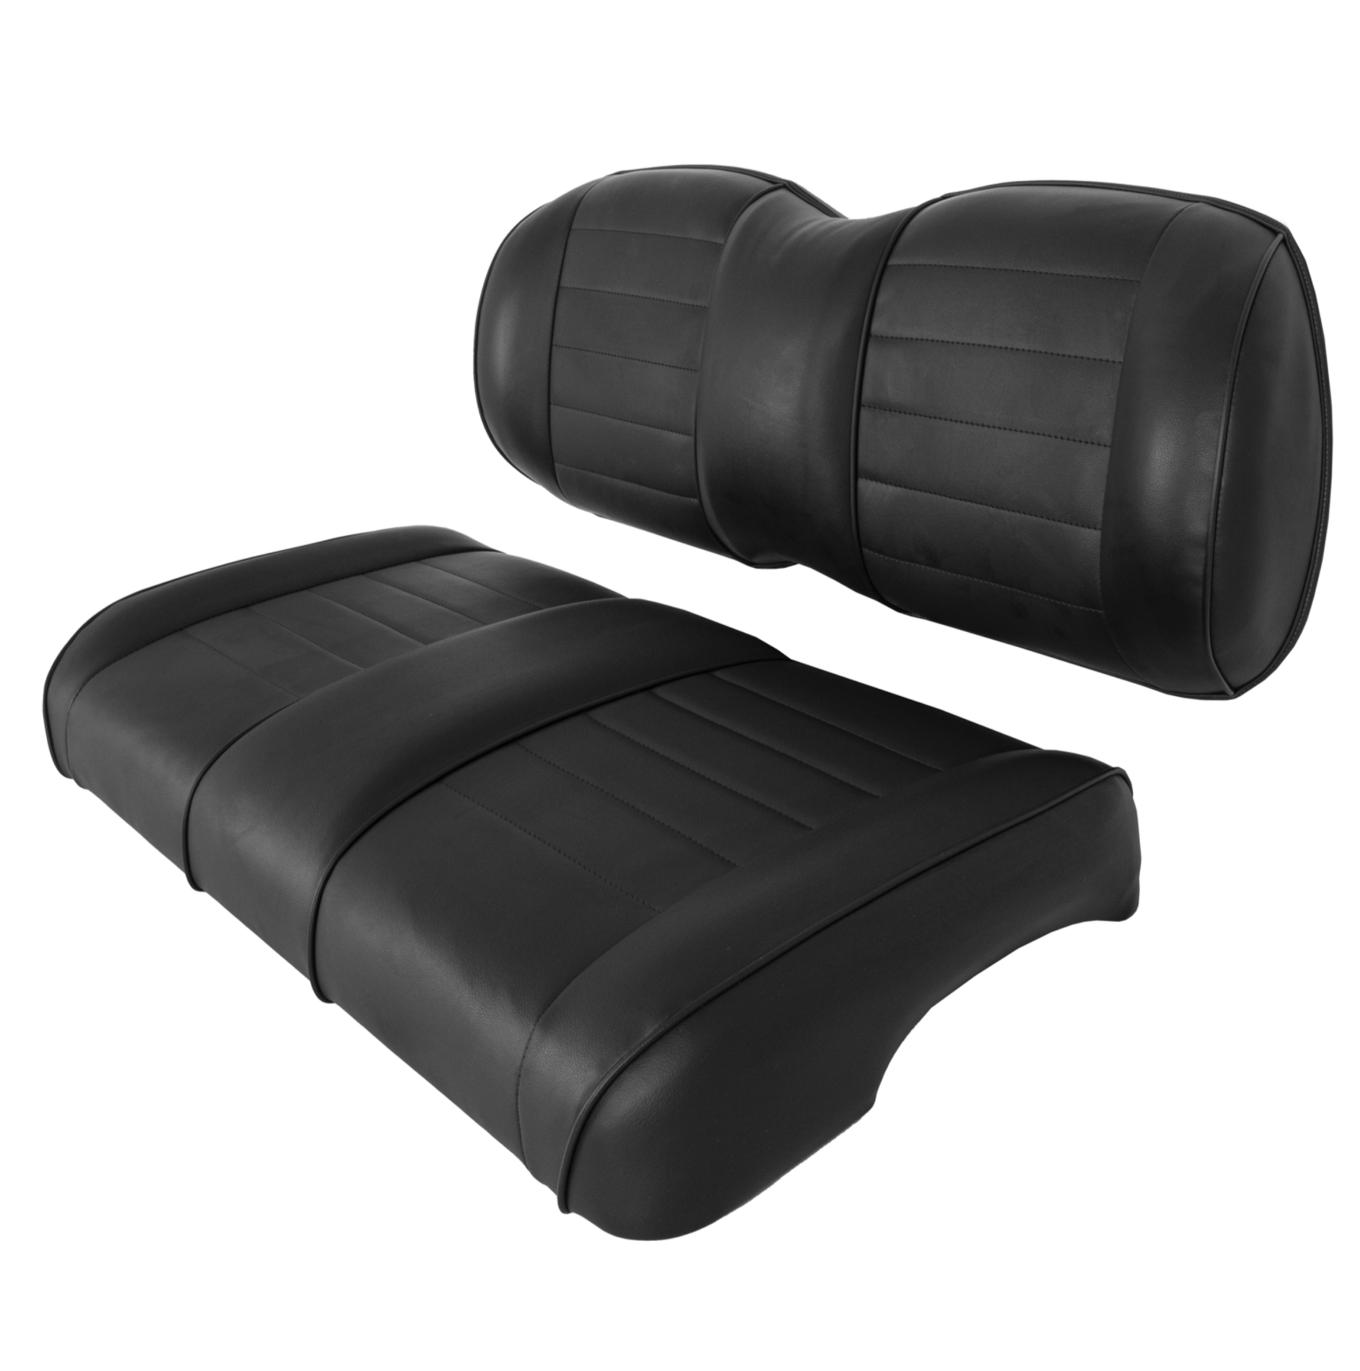 MadJax Alpha Body Kit Full Build (Precedent/Onward/Tempo)-No Battery-Upgraded Rear Seats